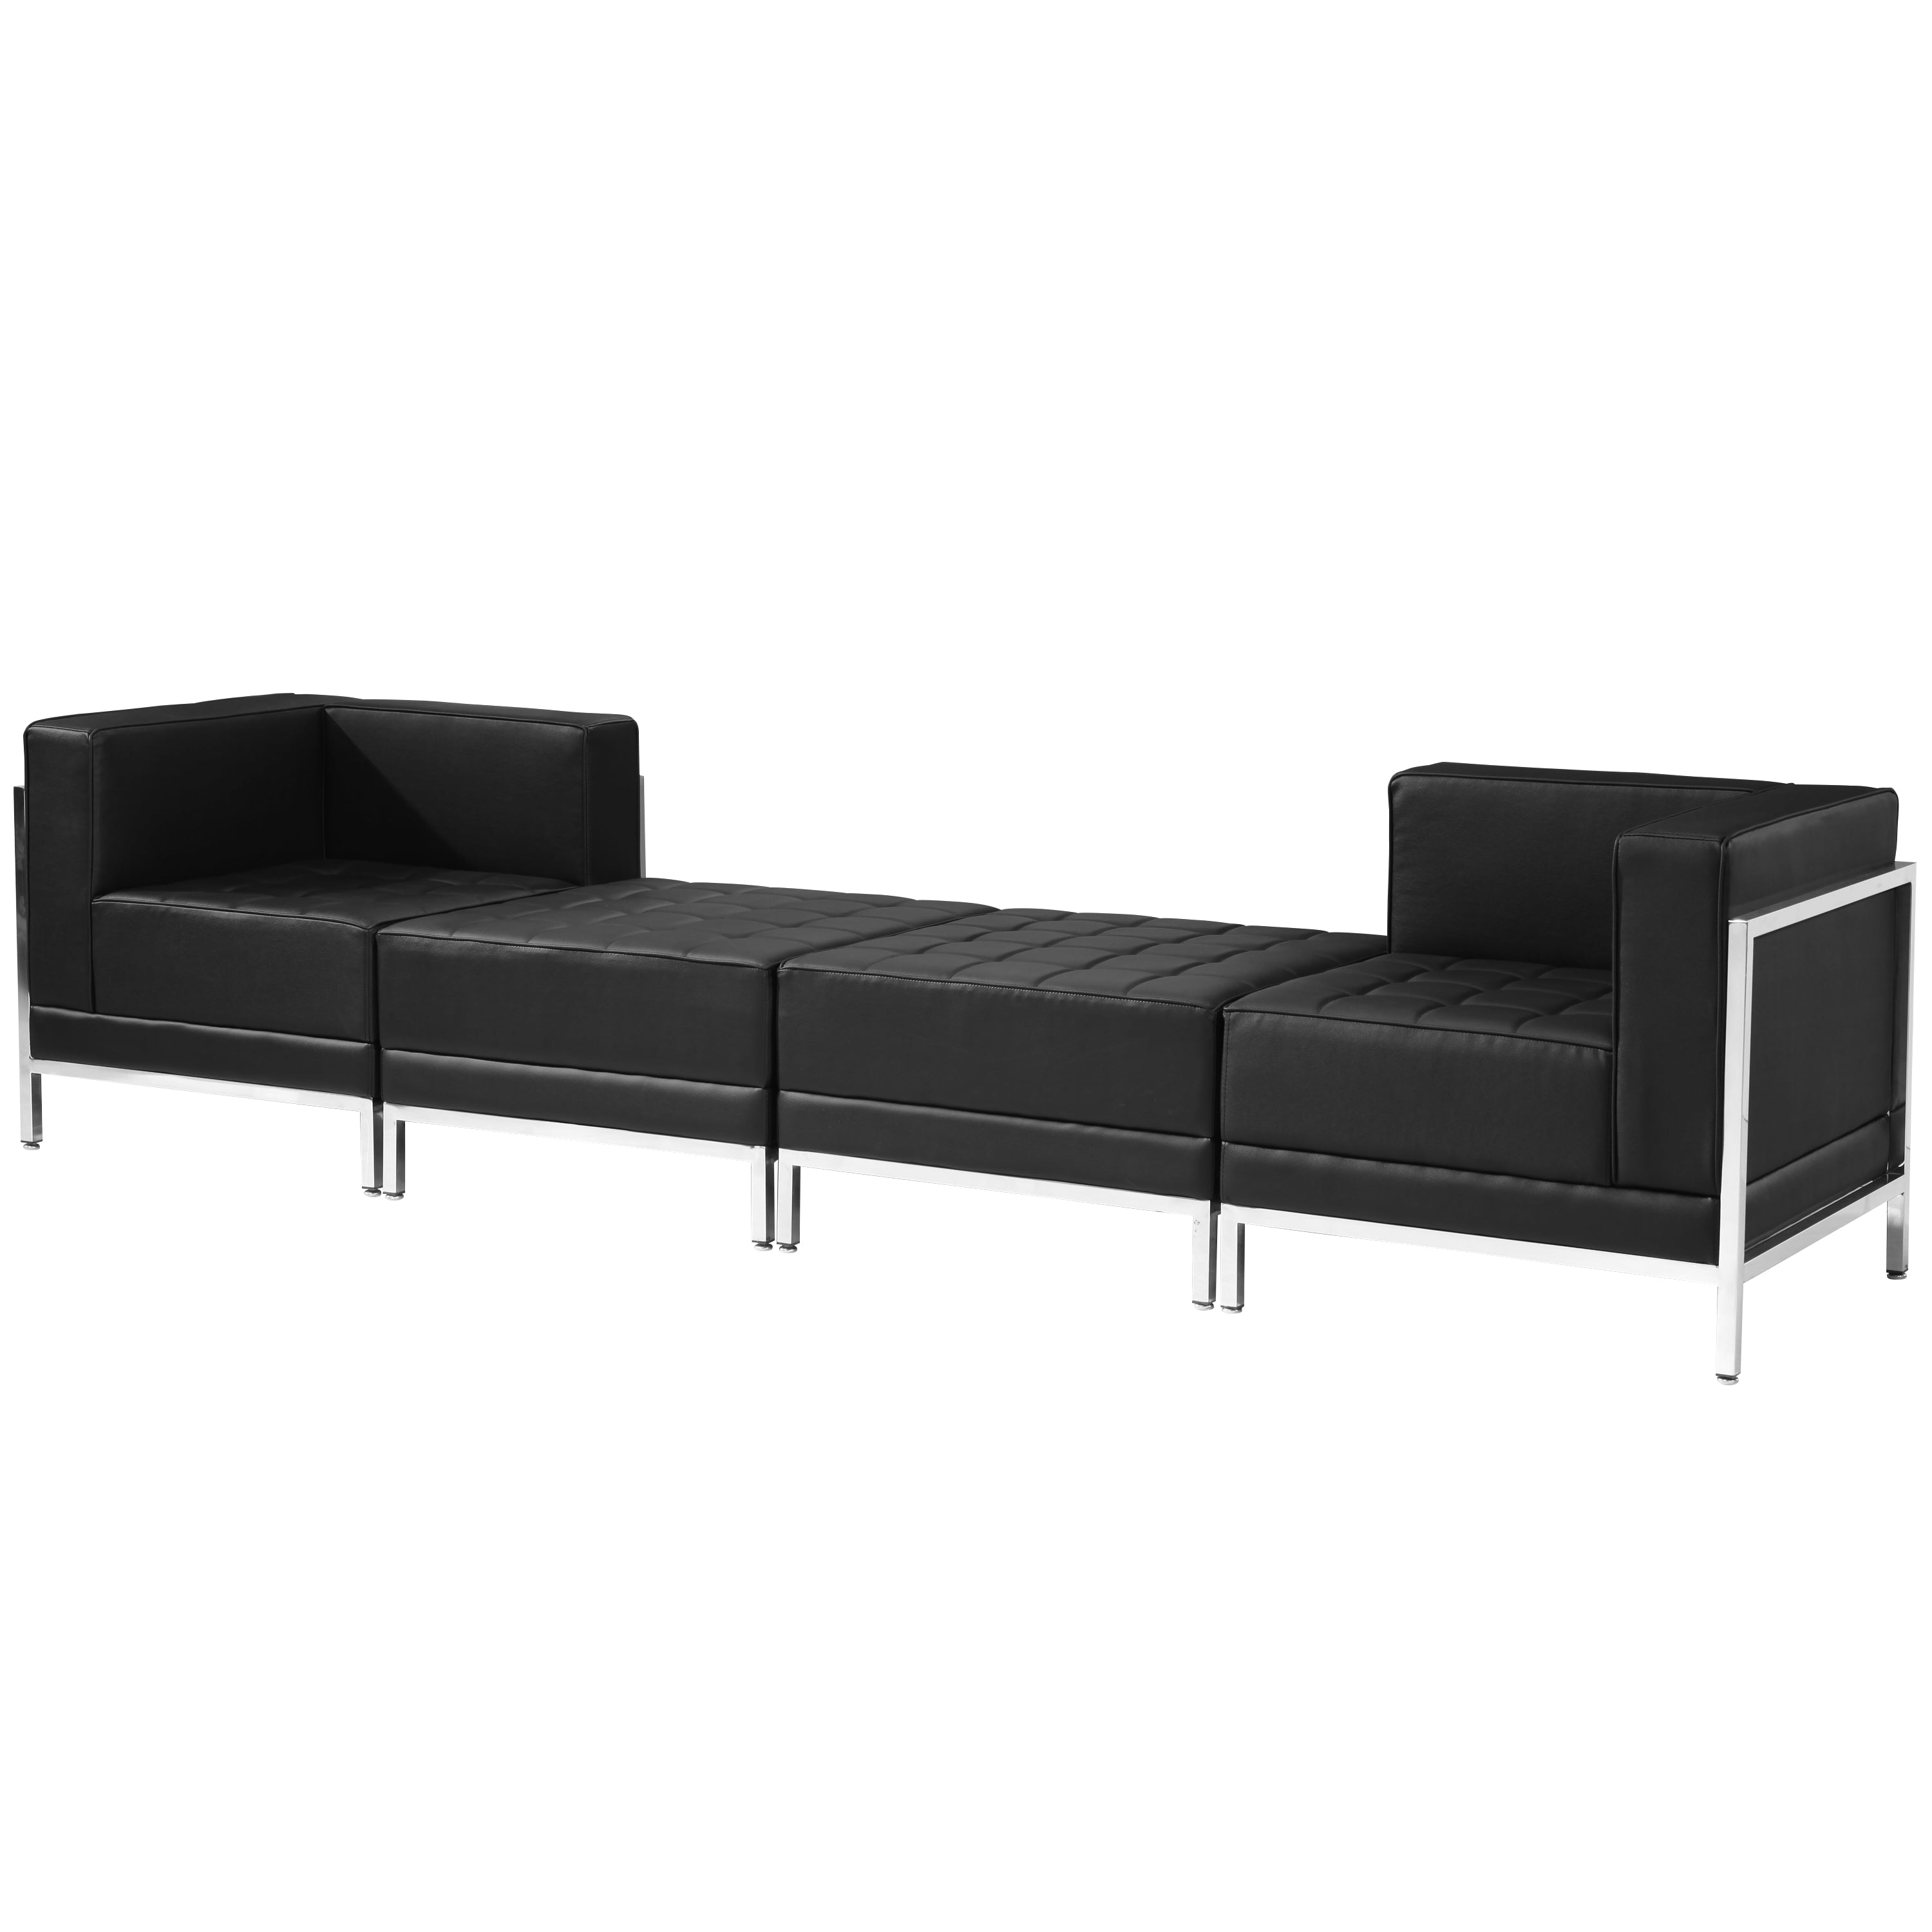 HERCULES Imagination Series LeatherSoft 4 Piece Chair & Ottoman Set-Modular Reception Set-Flash Furniture-Wall2Wall Furnishings